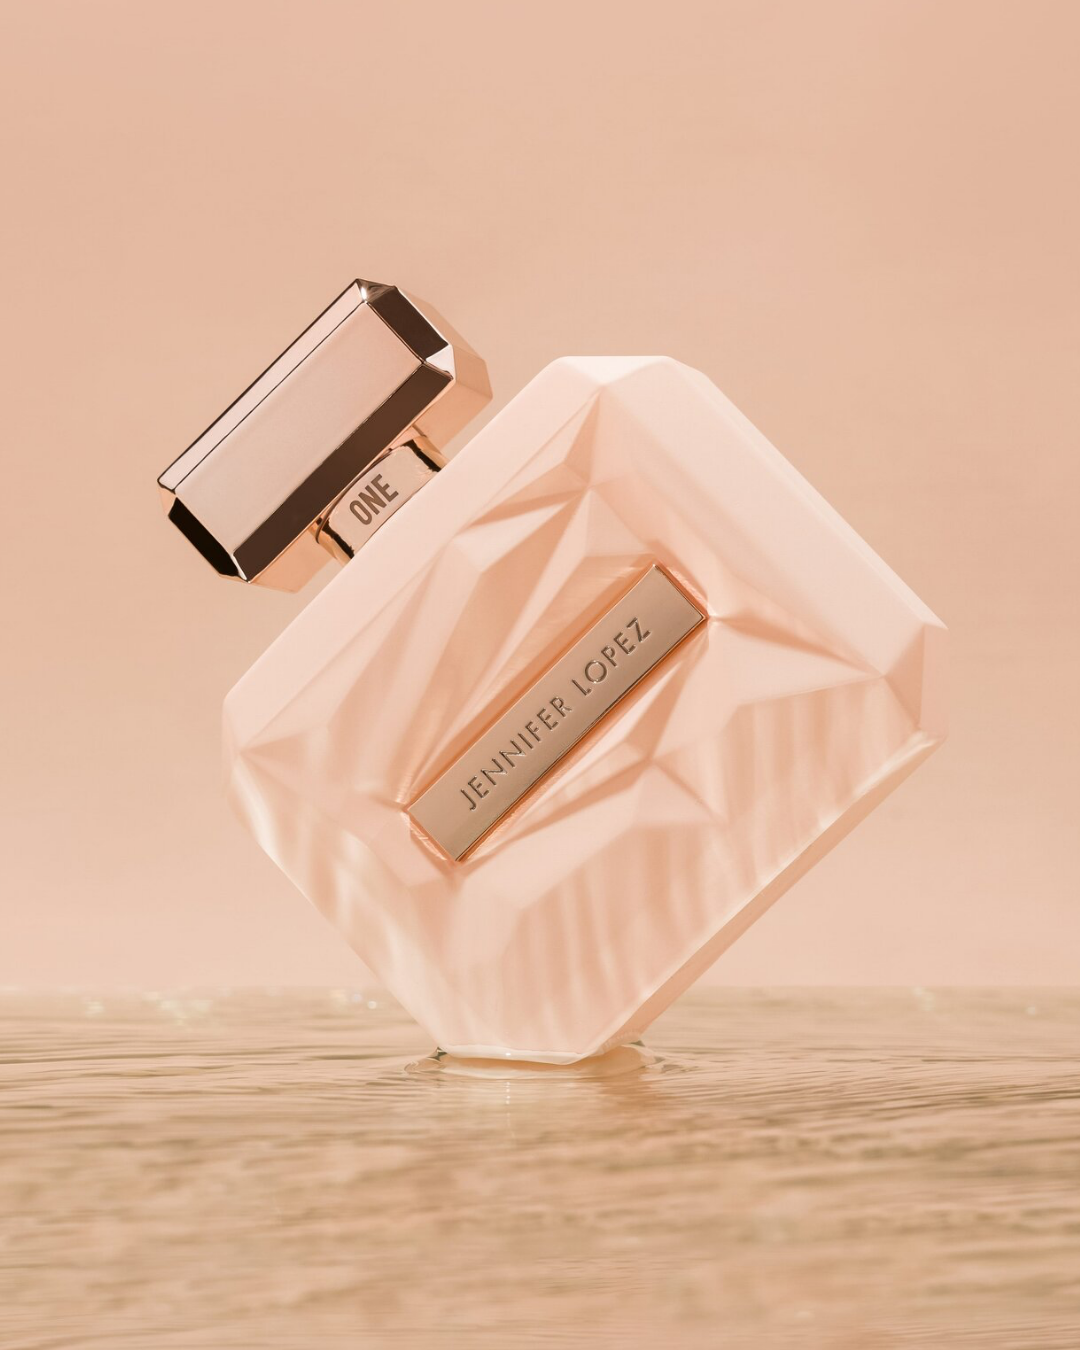 Luxury Celebrity Fragrance - Product Photography